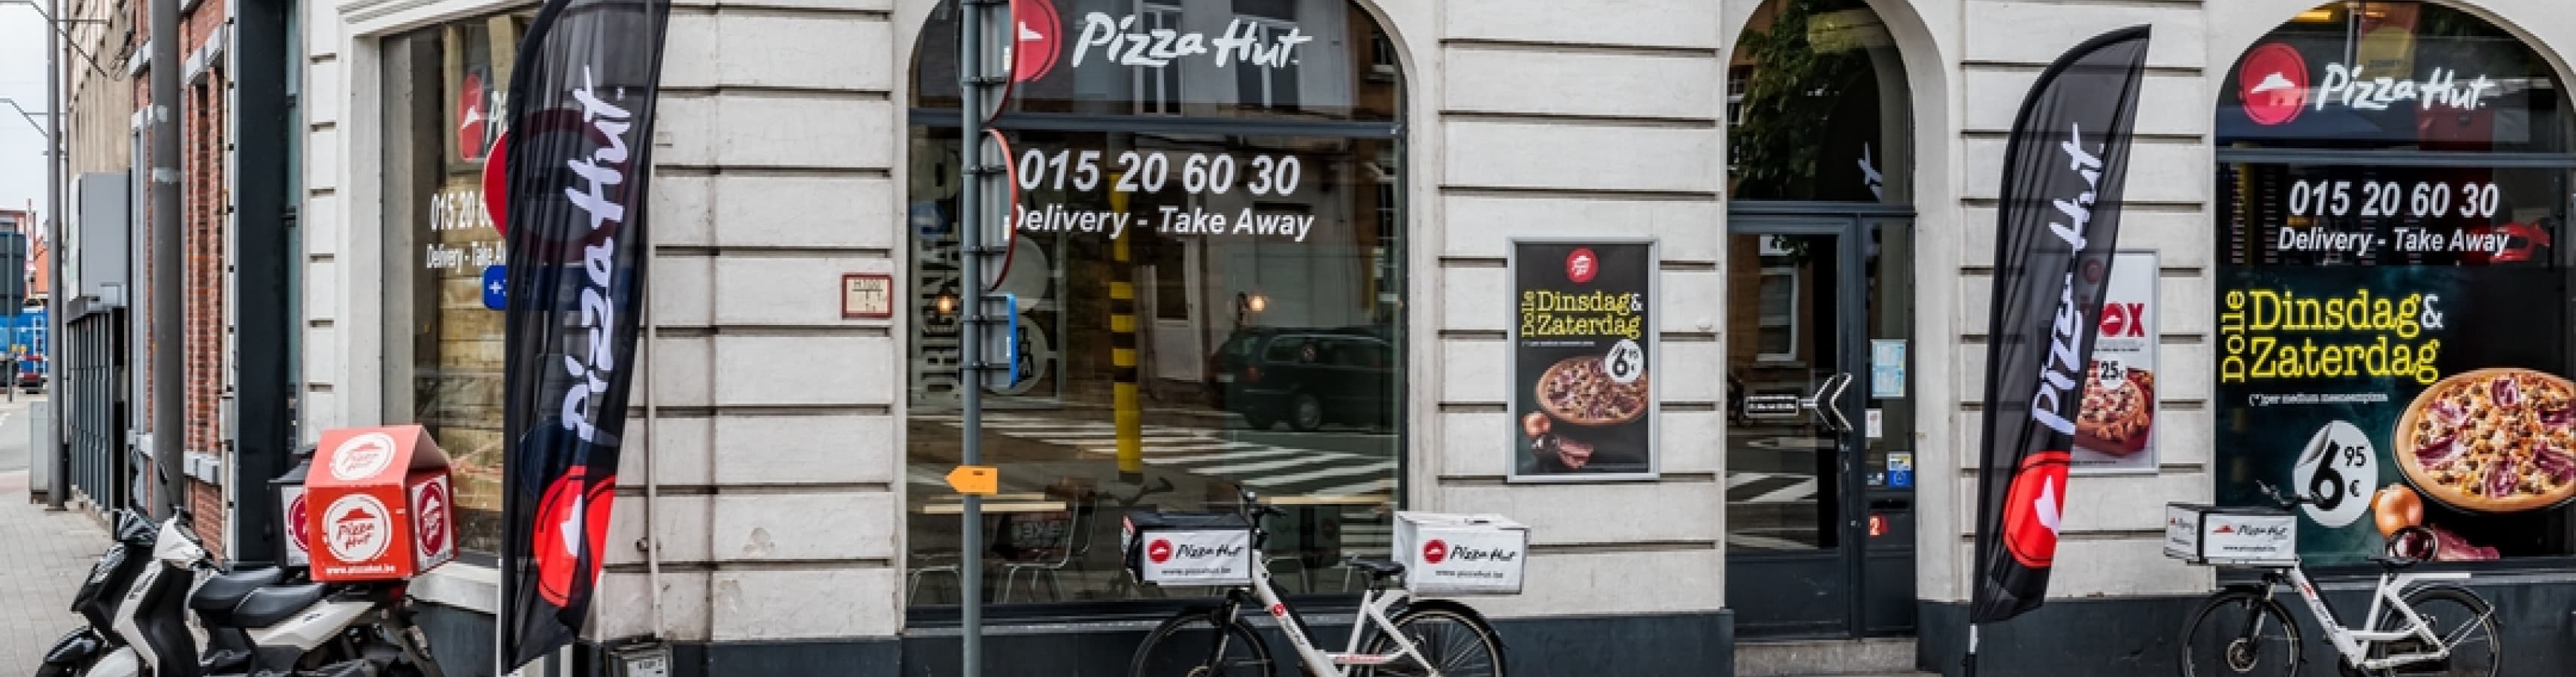 Pizza Hut delivery Mechelen